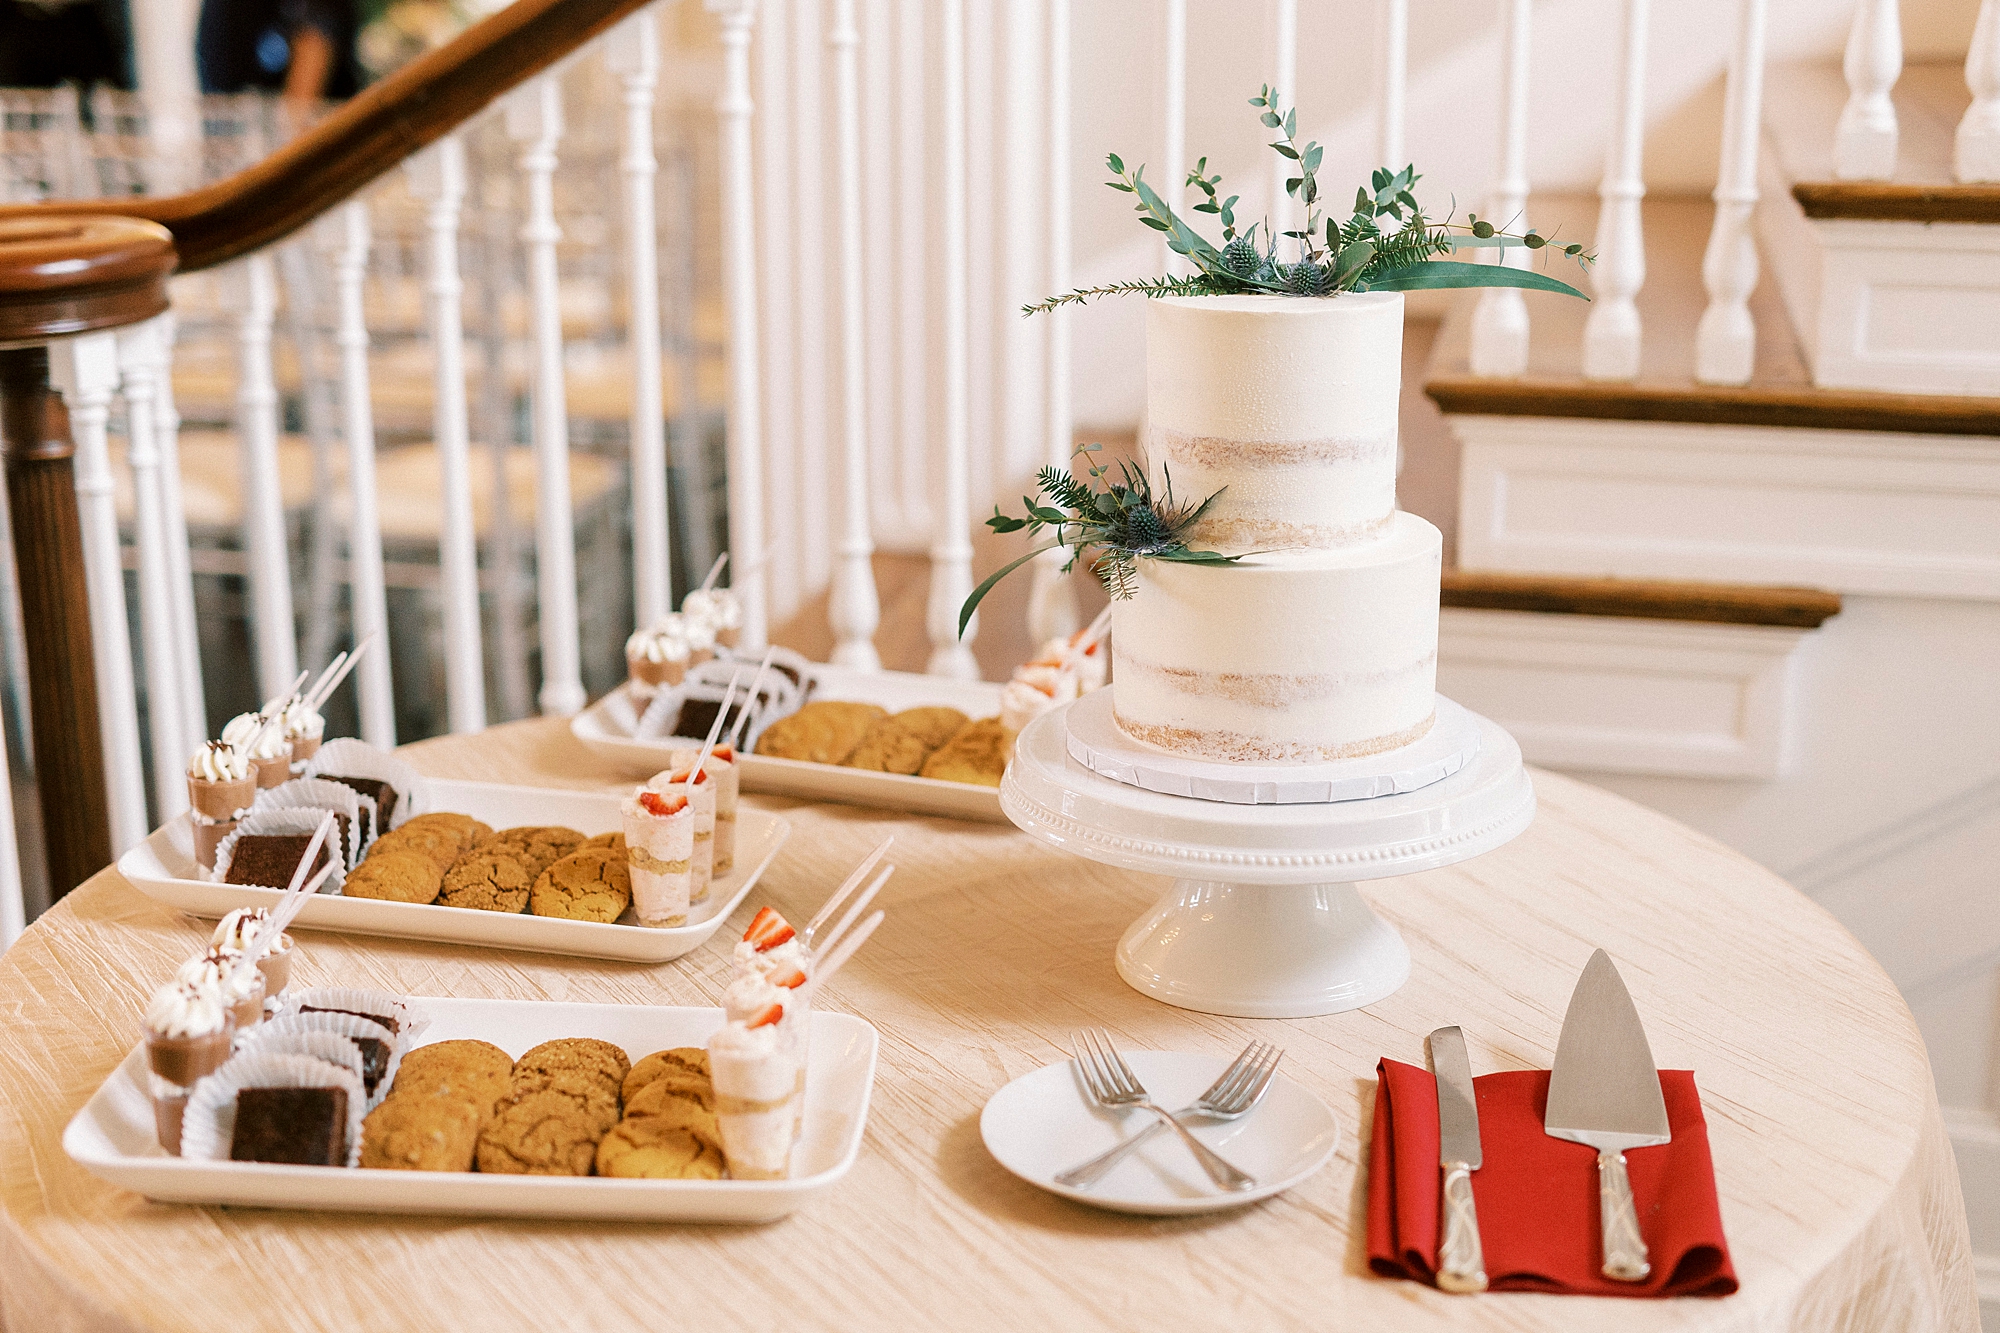 tiered wedding cake and dessert display for winter wedding reception 